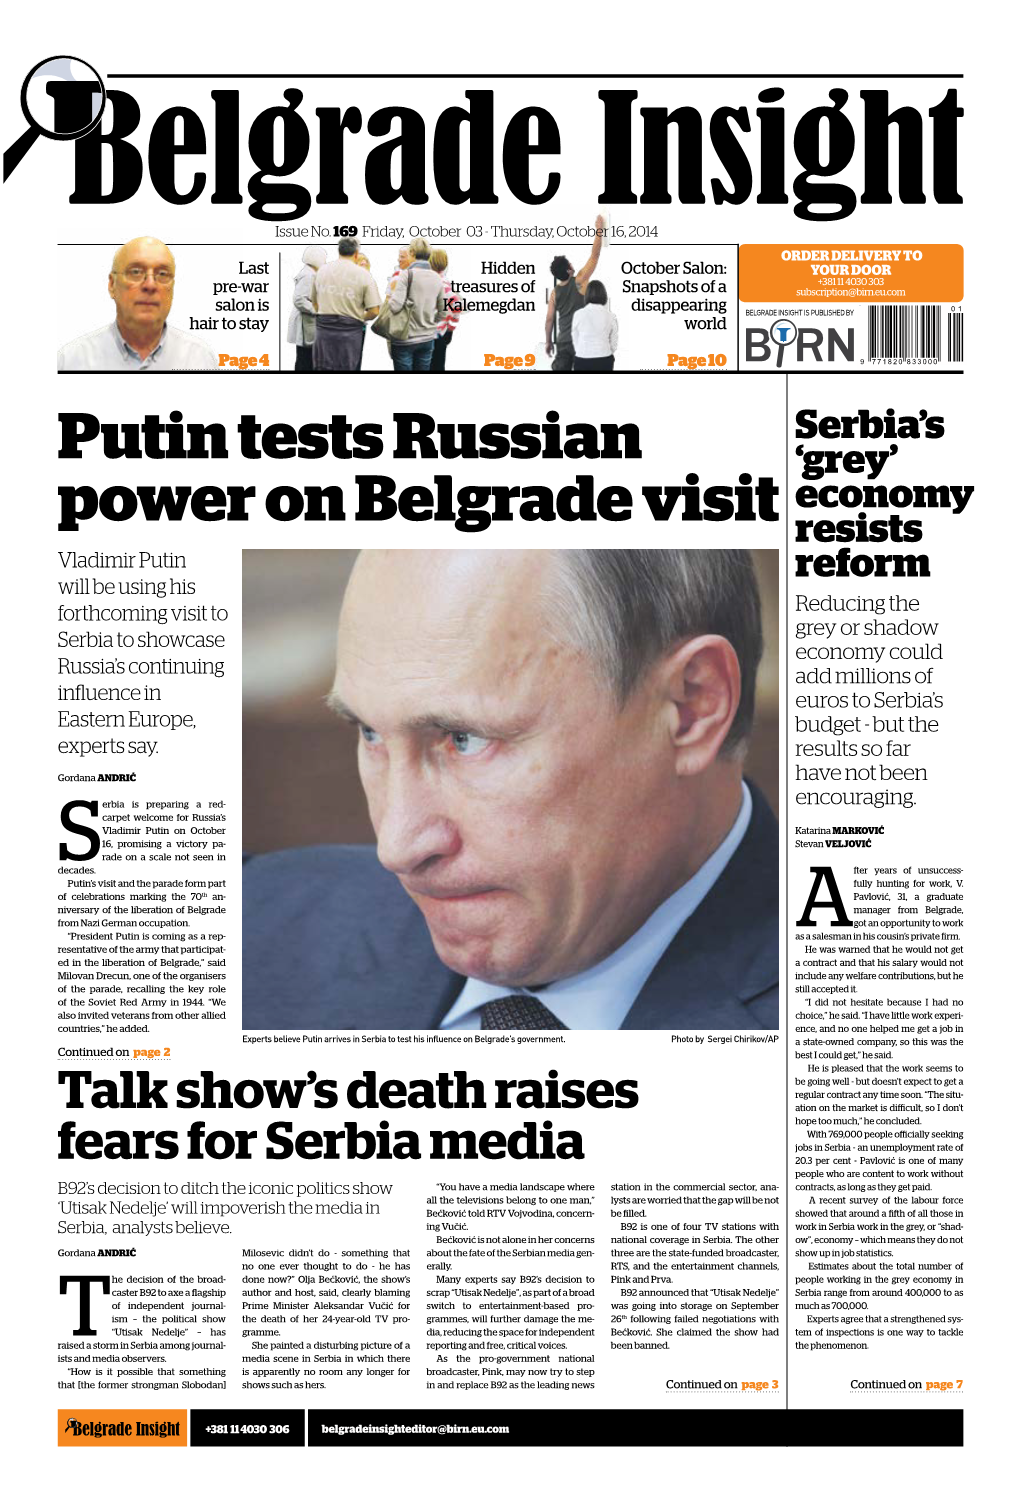 Putin Tests Russian Power on Belgrade Visit